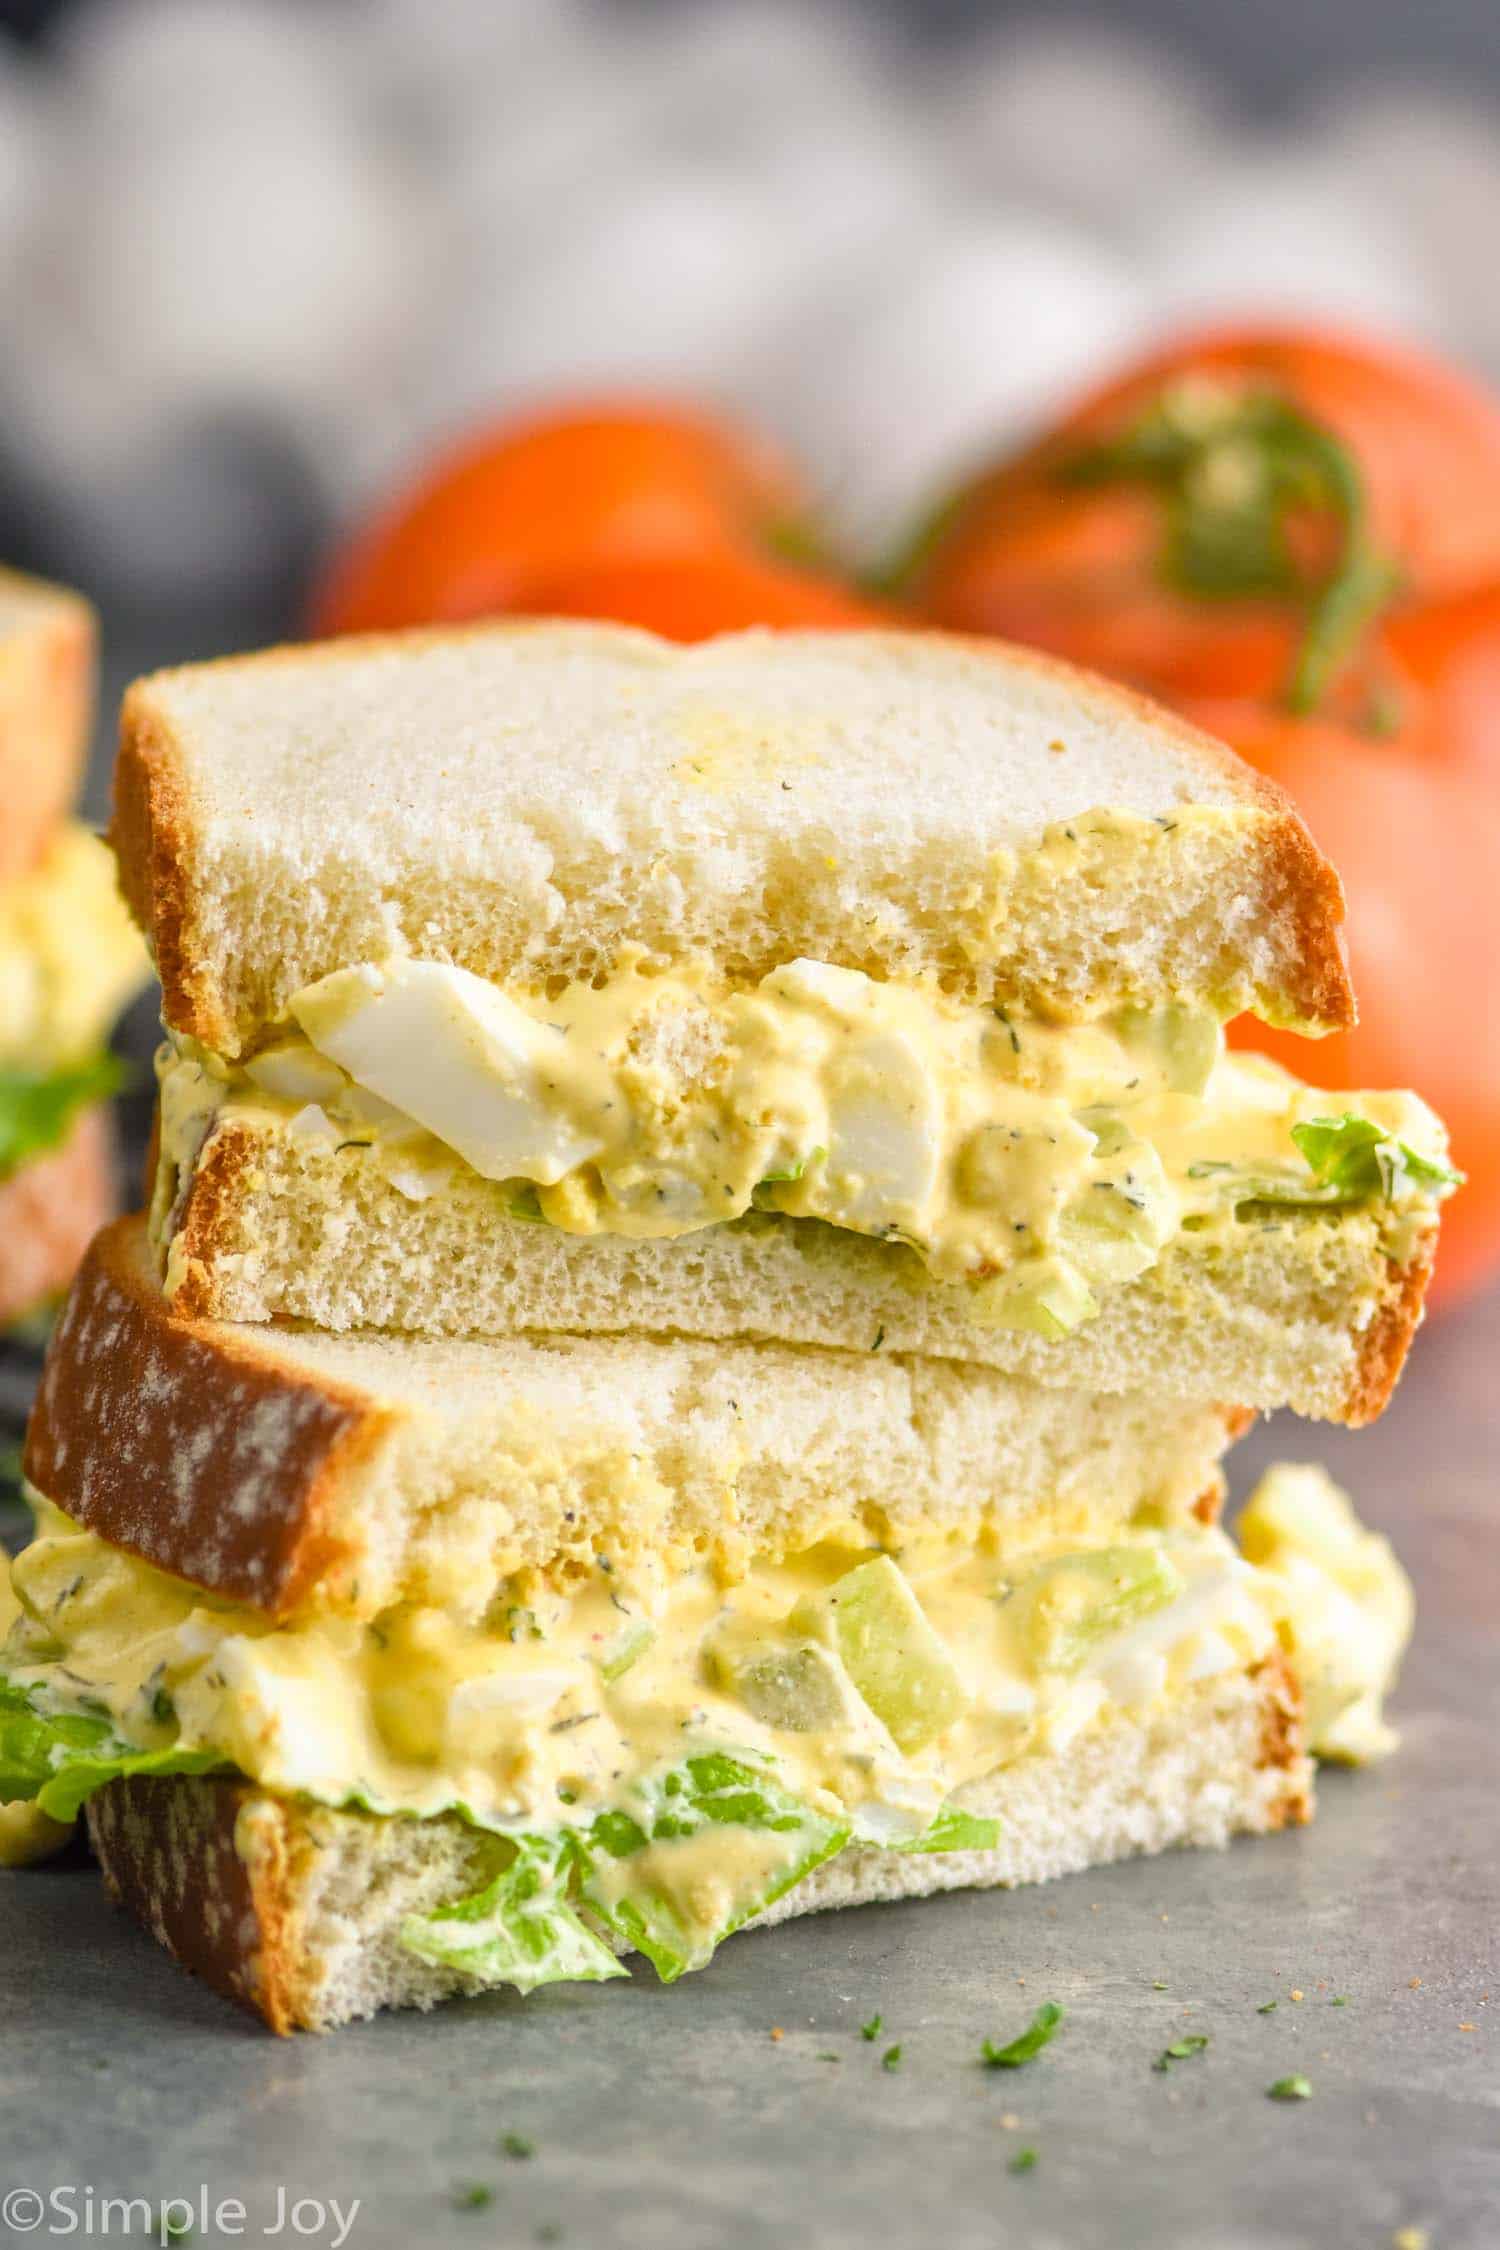 https://www.simplejoy.com/wp-content/uploads/2021/03/egg-salad-sandwich-recipe.jpg